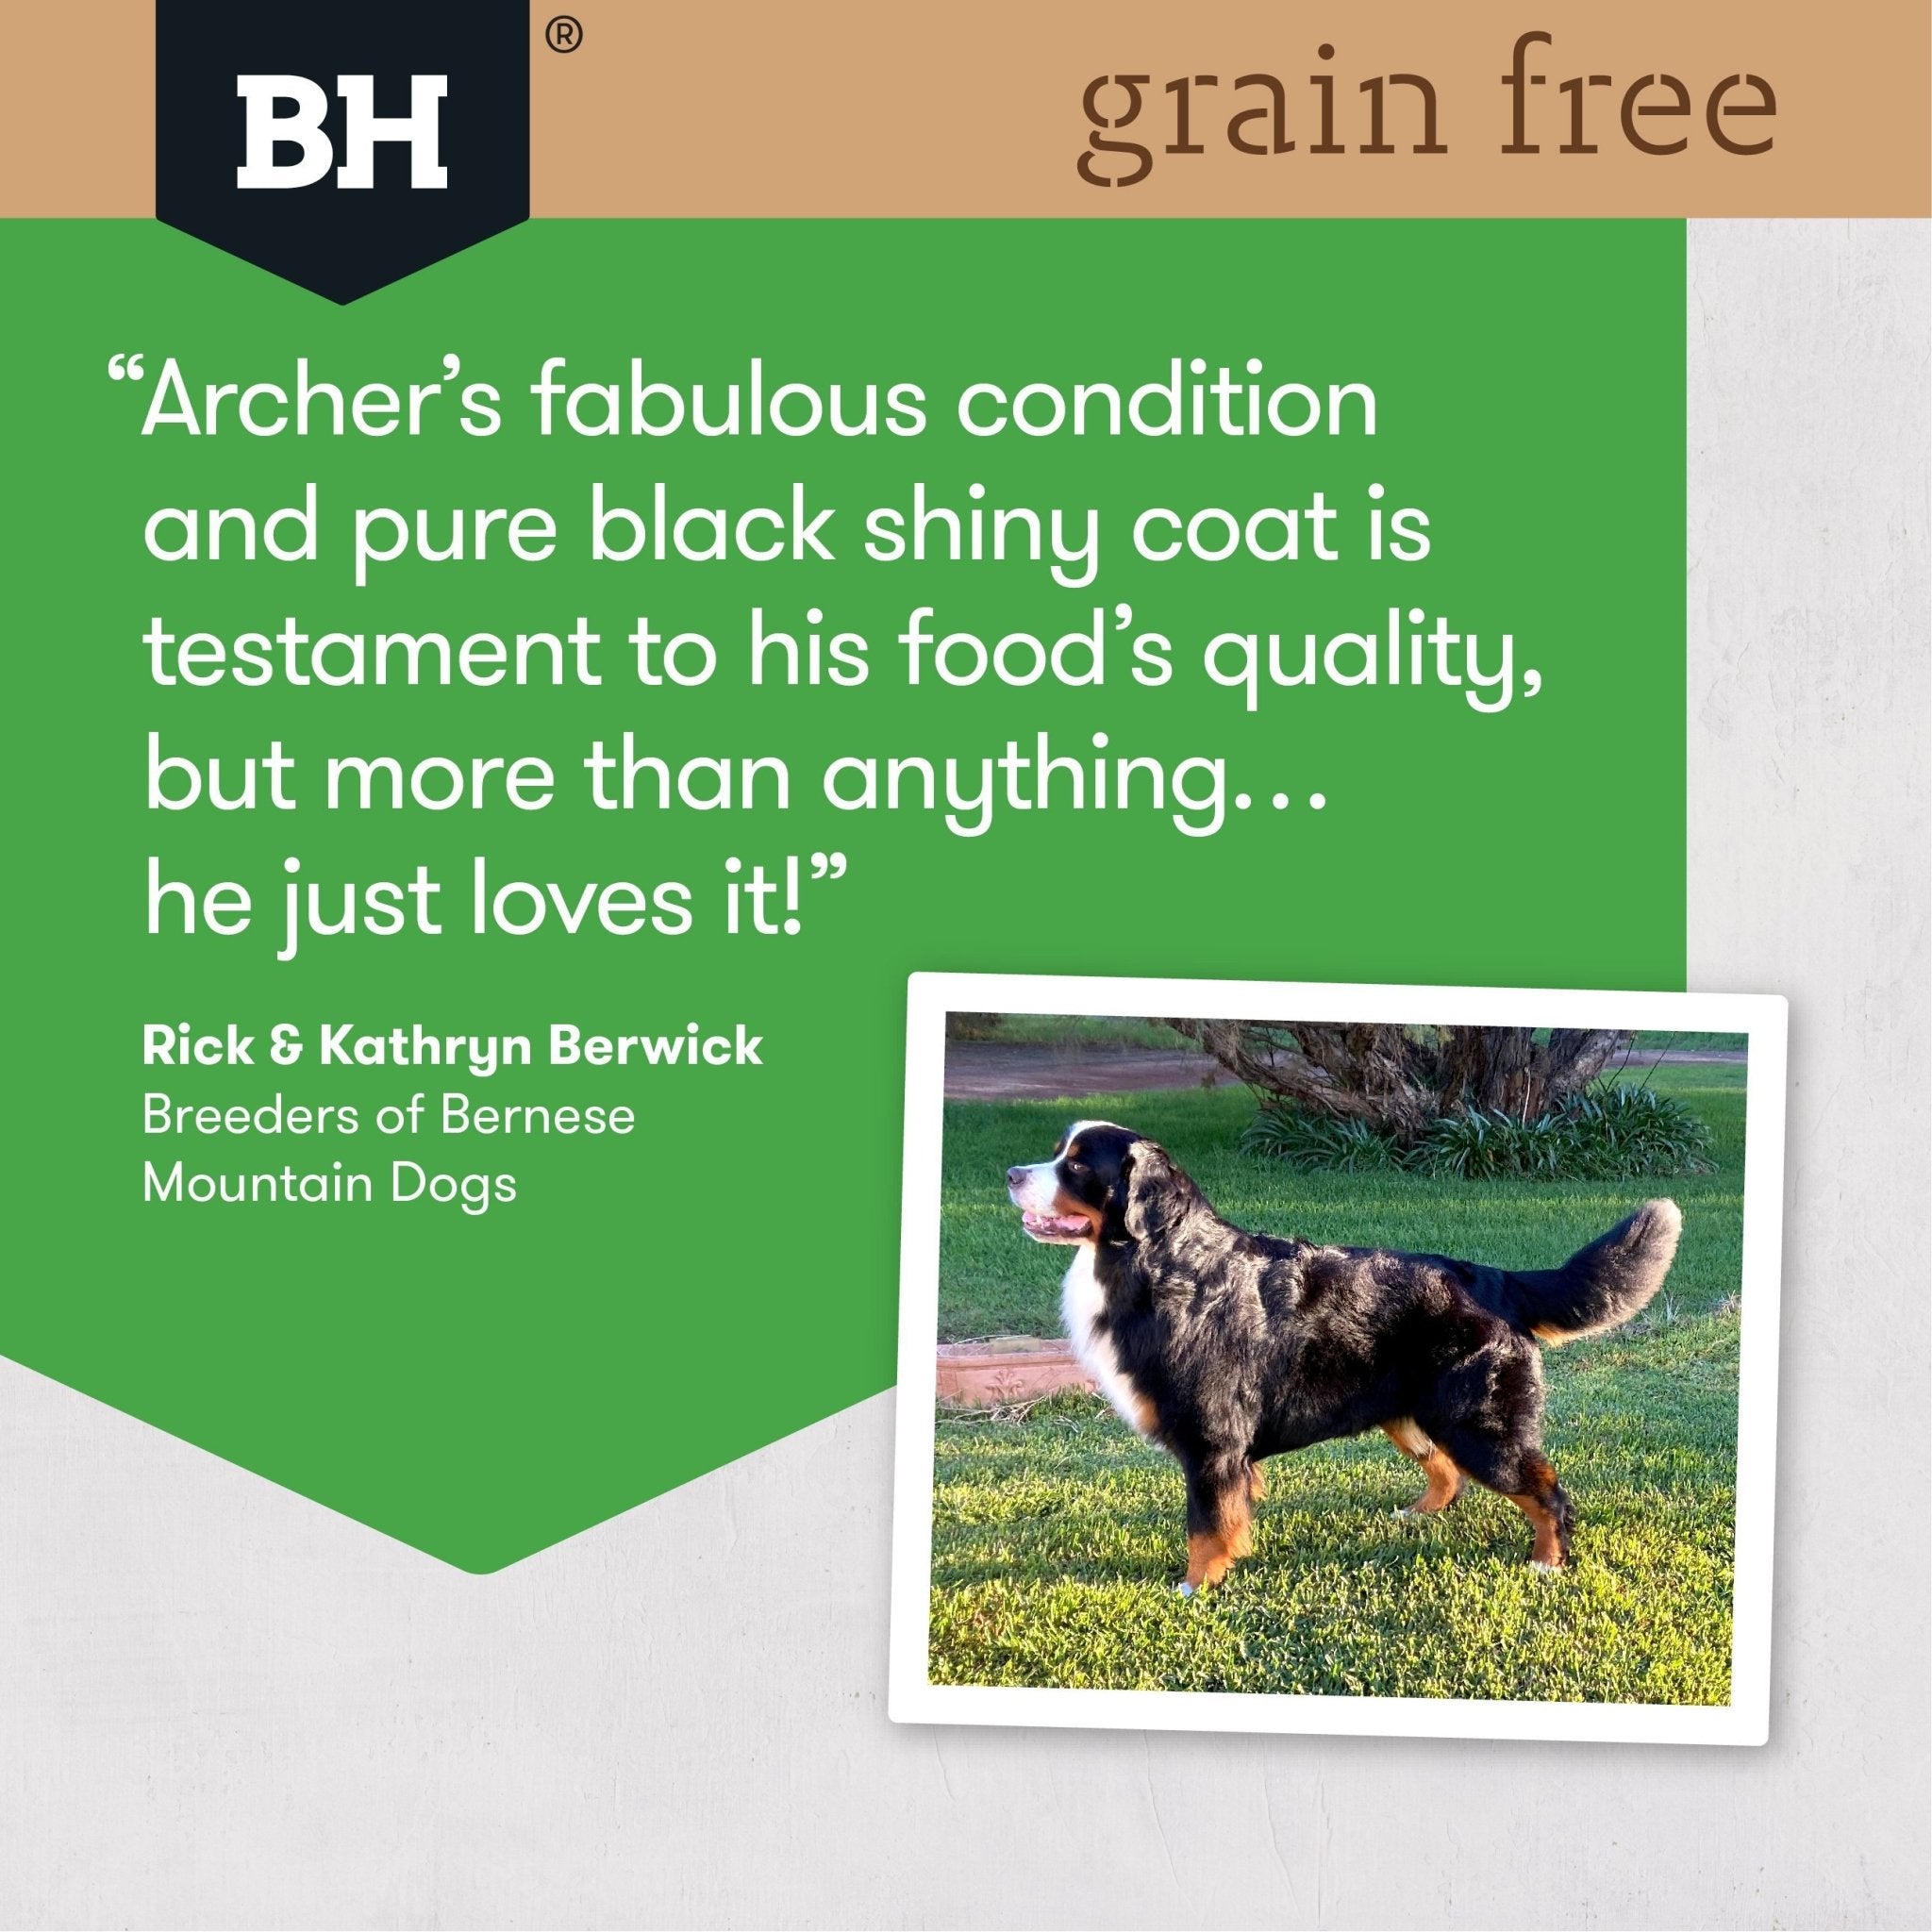 Black Hawk Grain Free Adult Chicken Large Breed Dry Dog Food 15kg